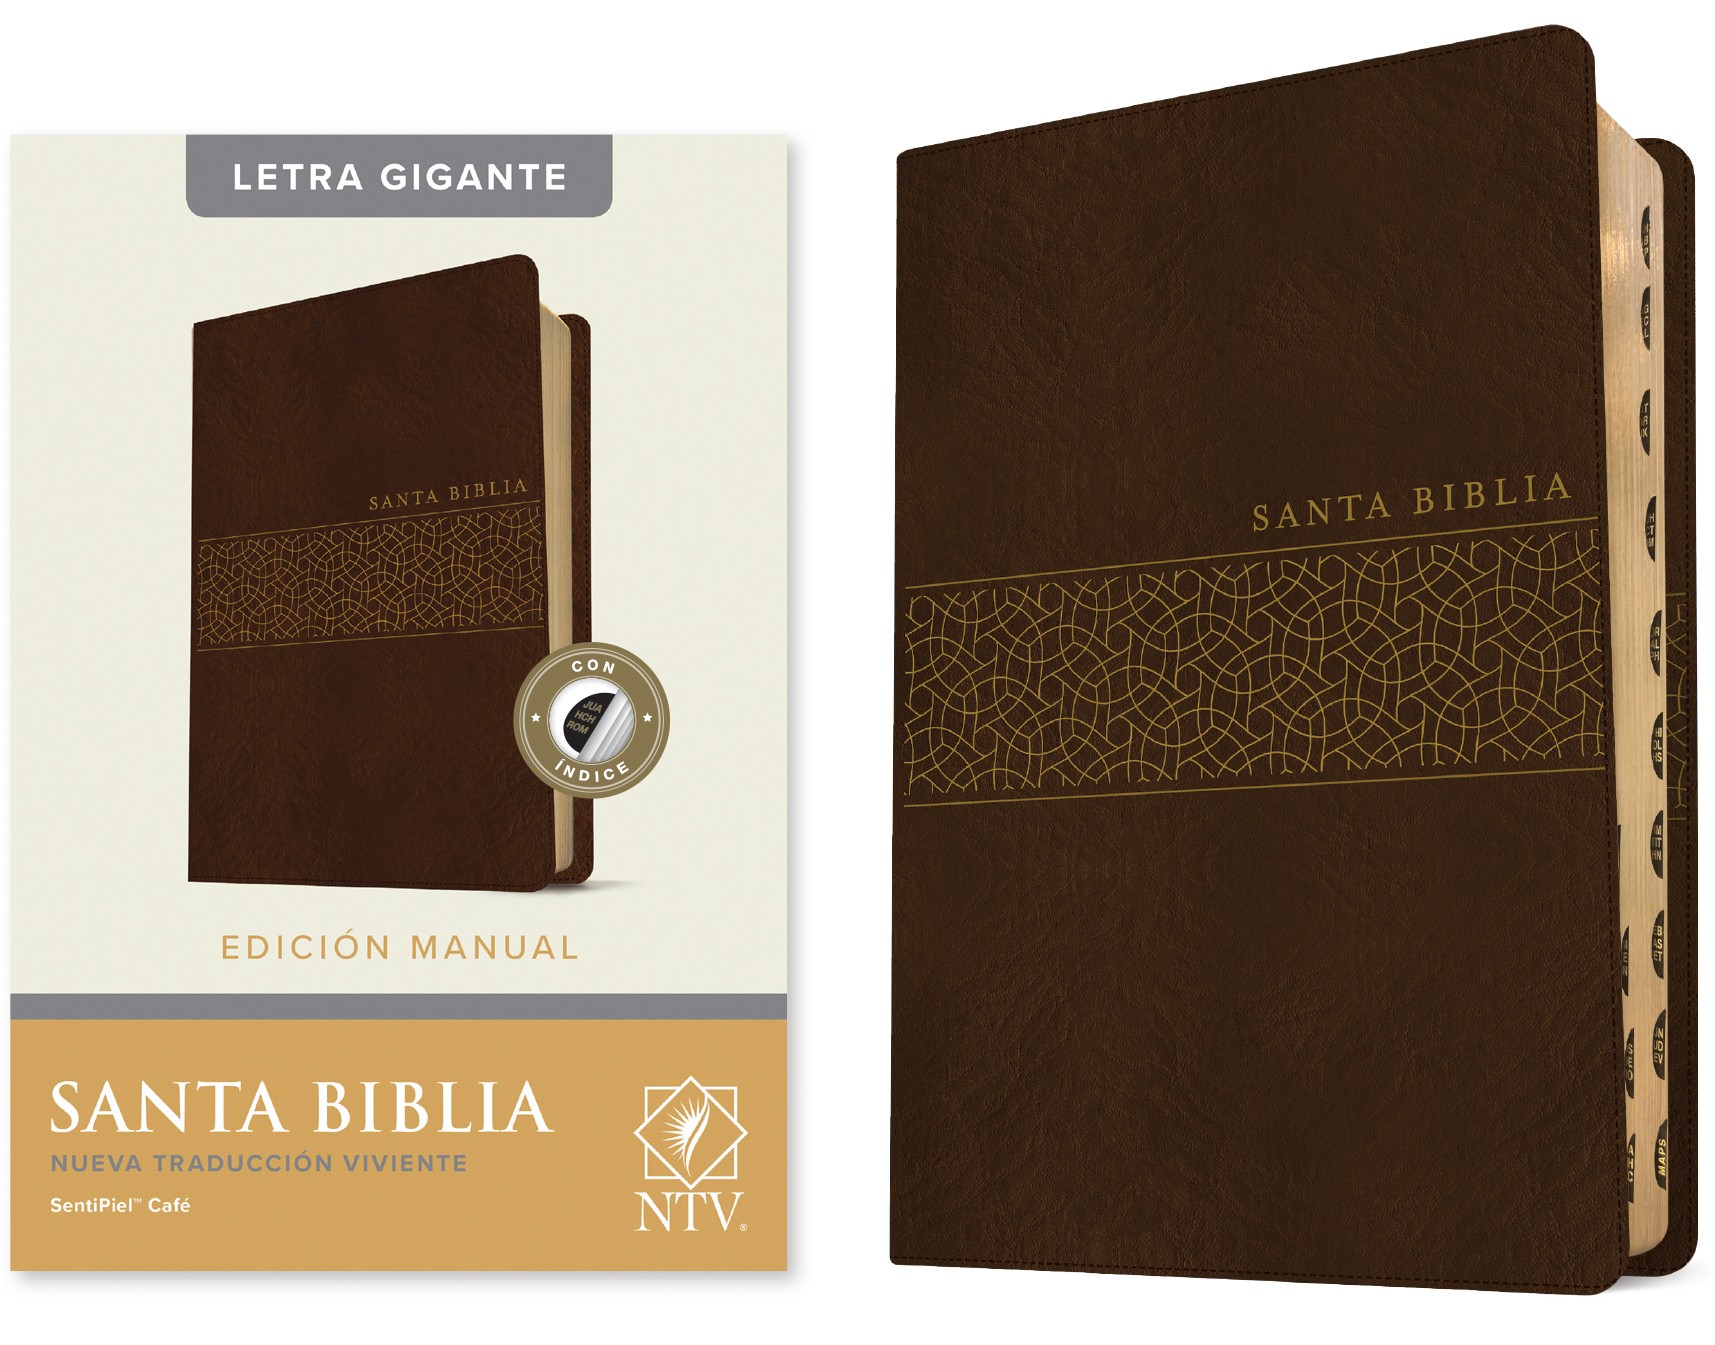  Santa Biblia NTV, Edición manual, letra gigante (Letra Roja, SentiPiel, Café, Índice)